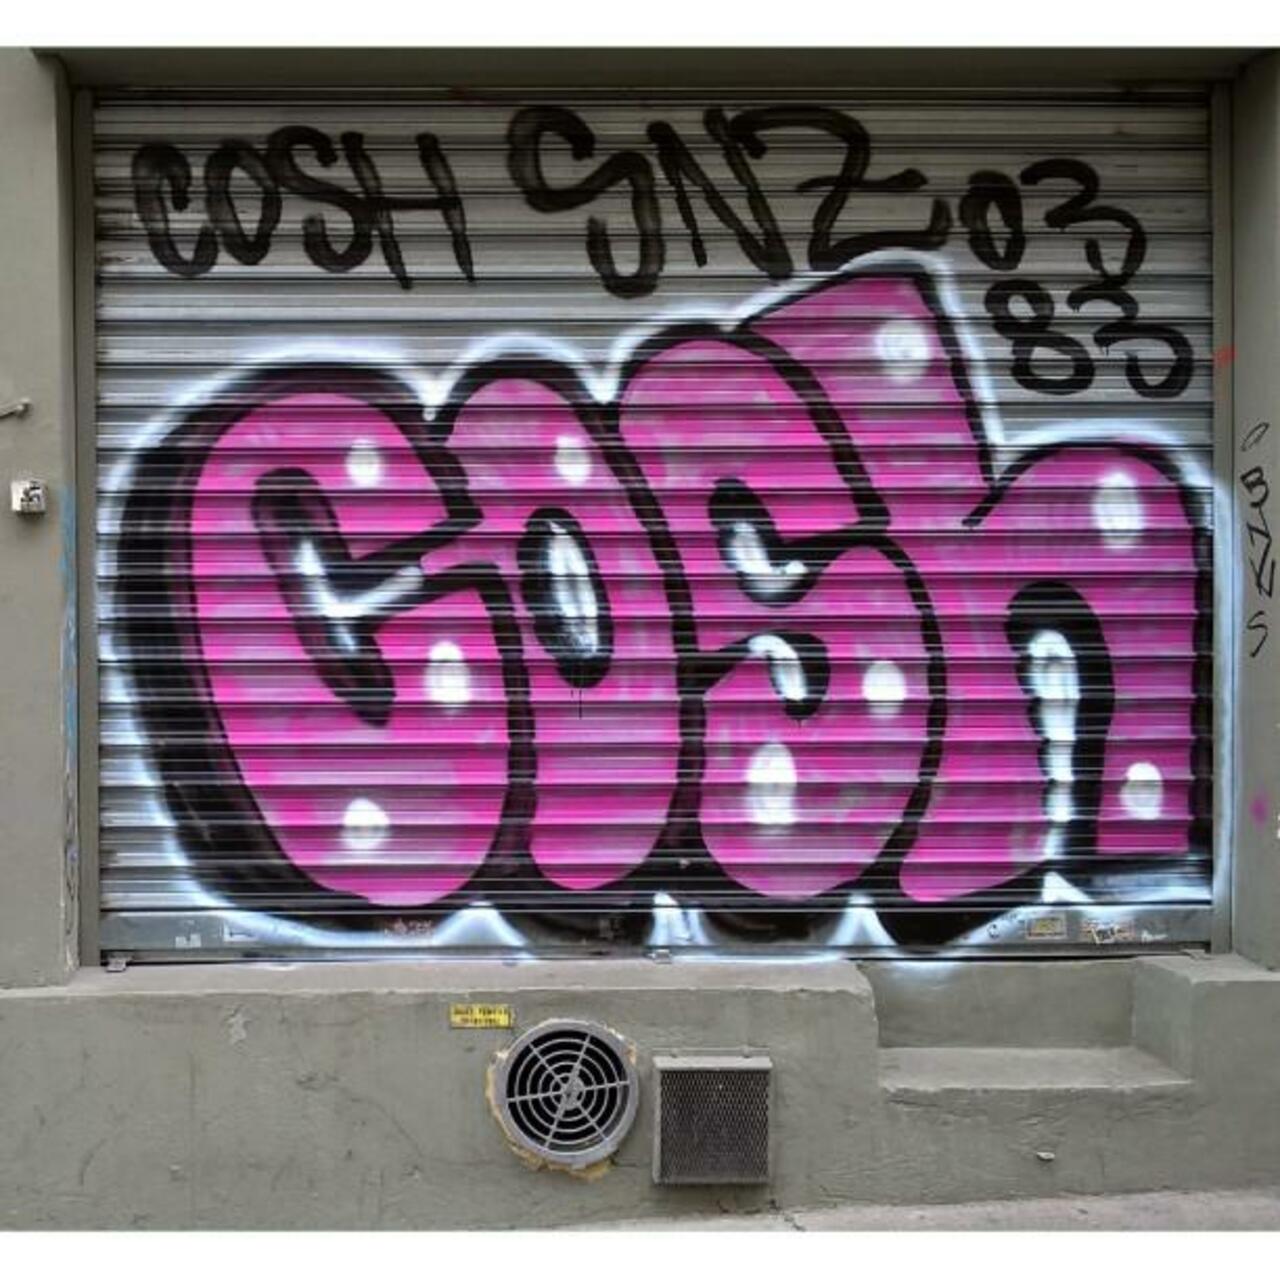 http://ift.tt/1KiqpQt #Paris #graffiti photo by maxdimontemarciano http://ift.tt/1MOWDDV #StreetArt http://t.co/uPf32SmuoO